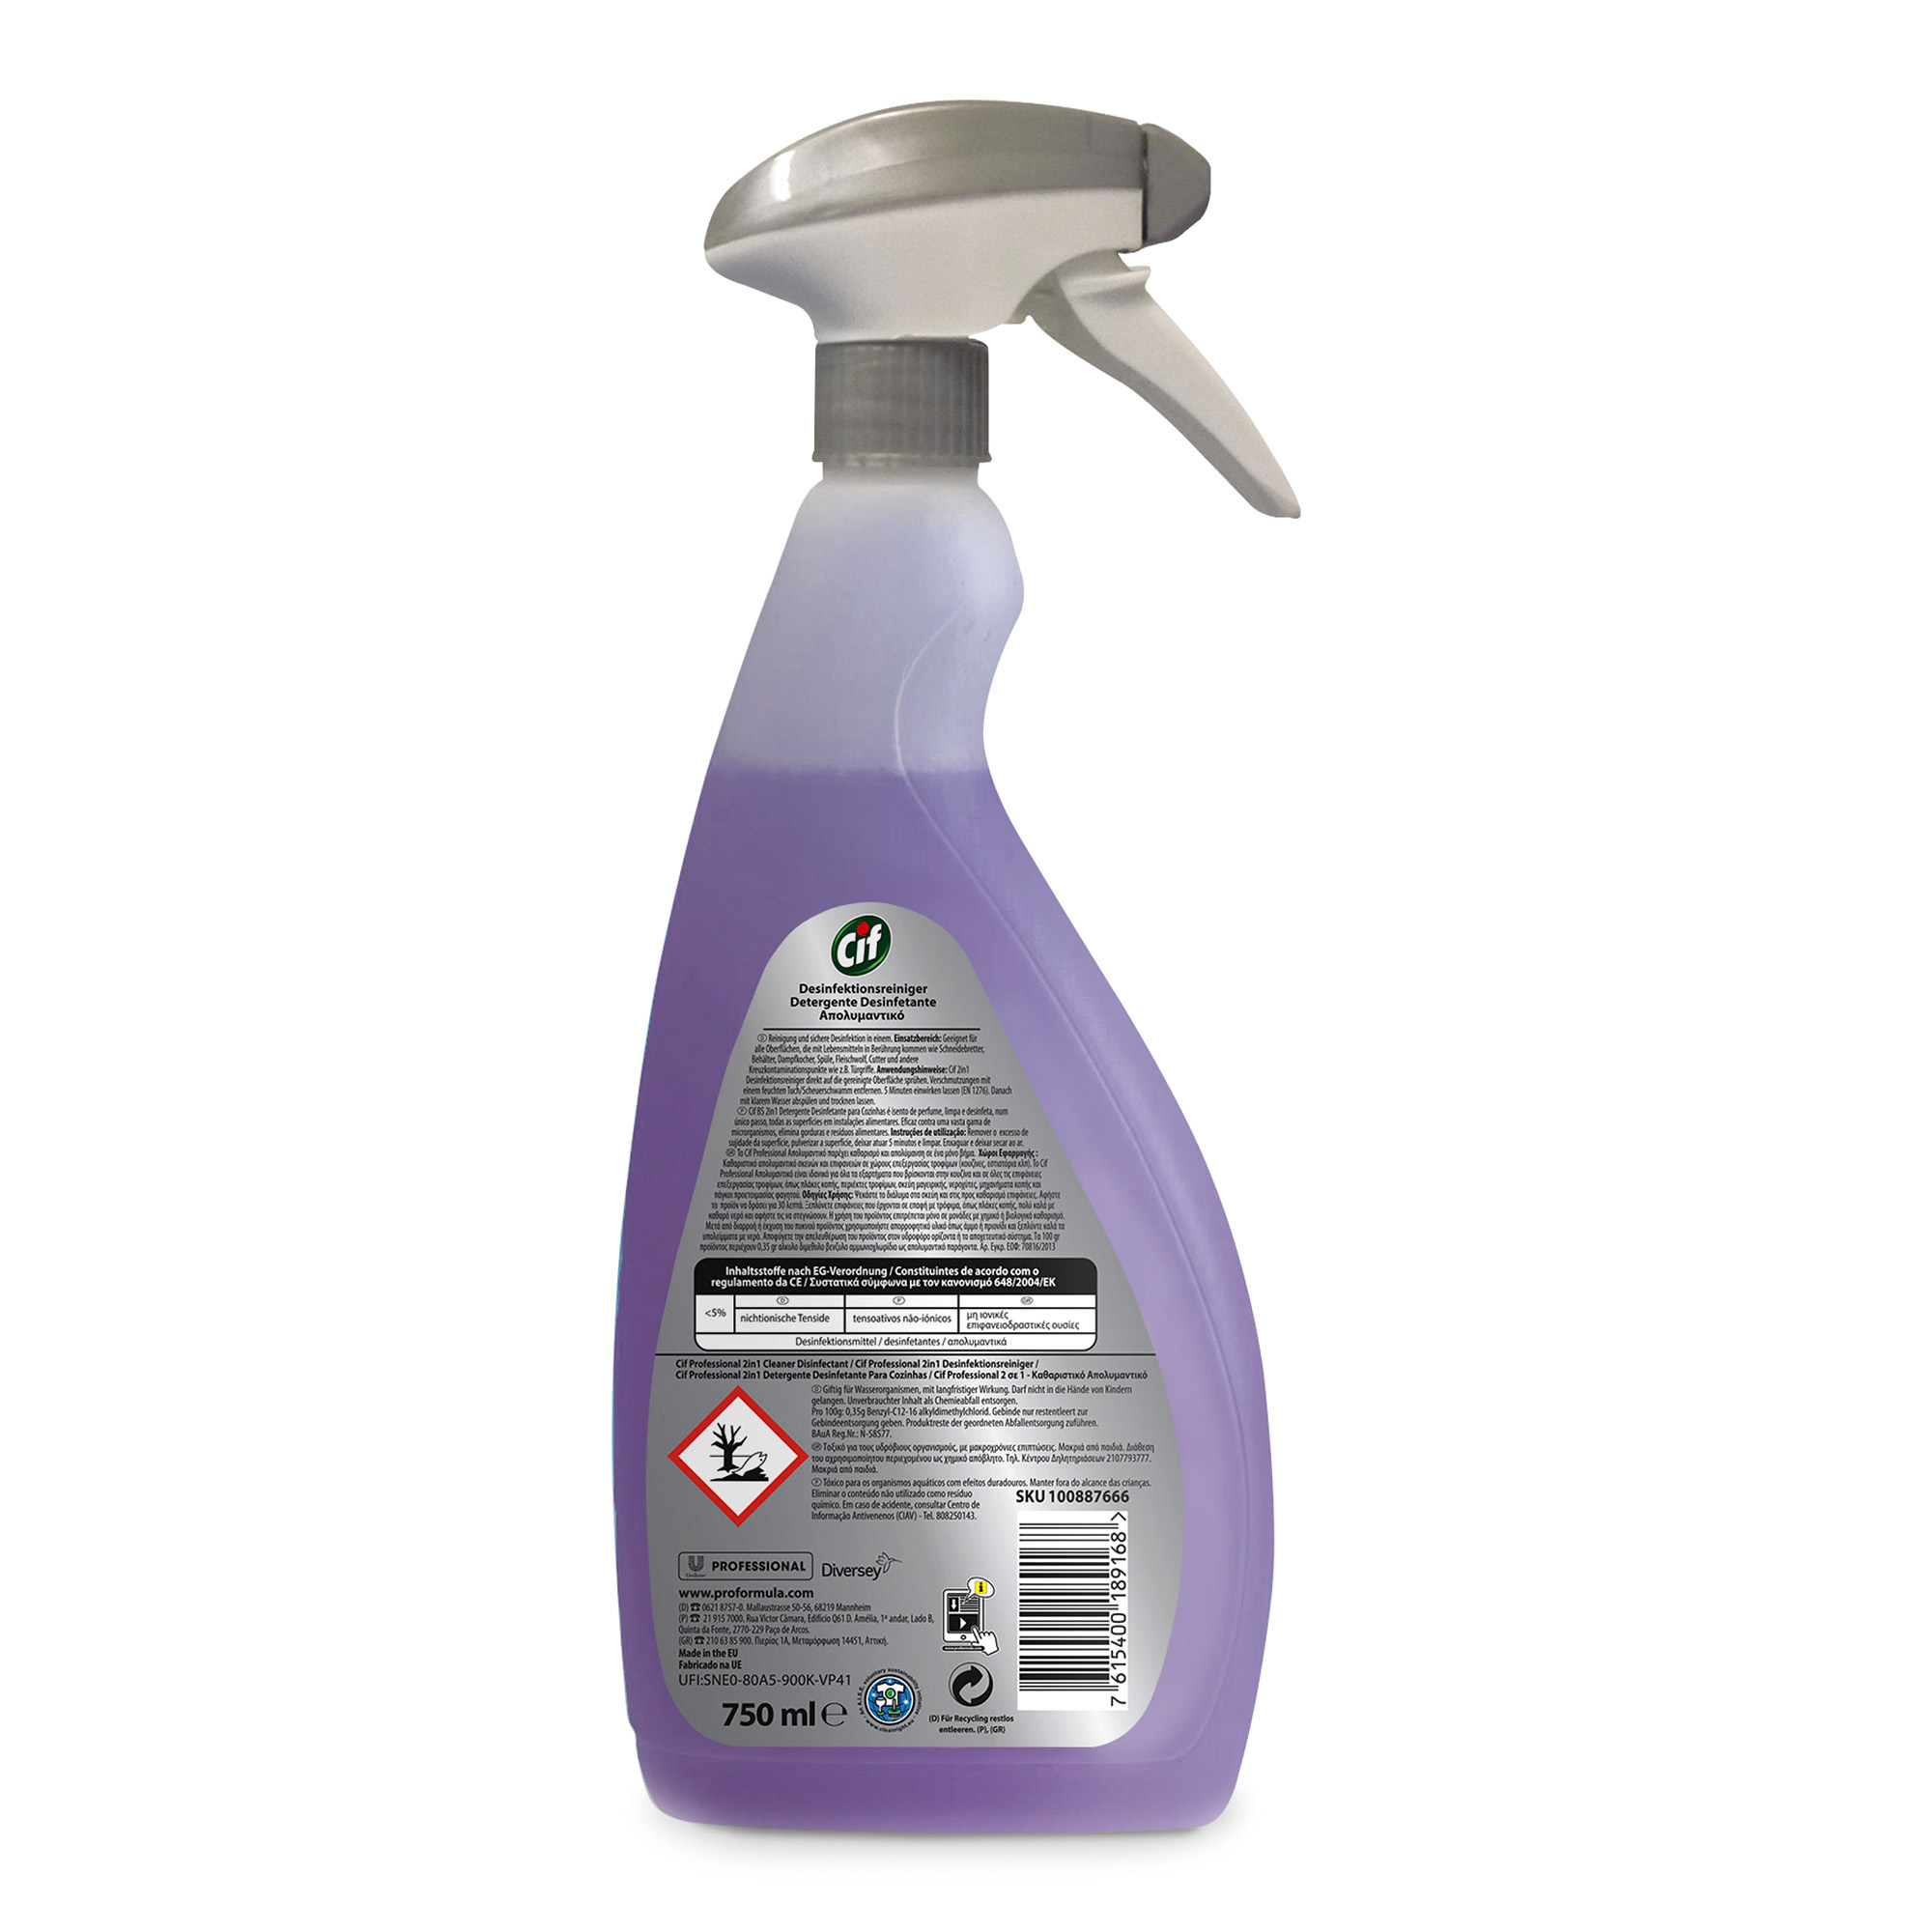 Cif Professional 2in1 Desinfektionsreiniger 750 ml Flasche 100887666-1